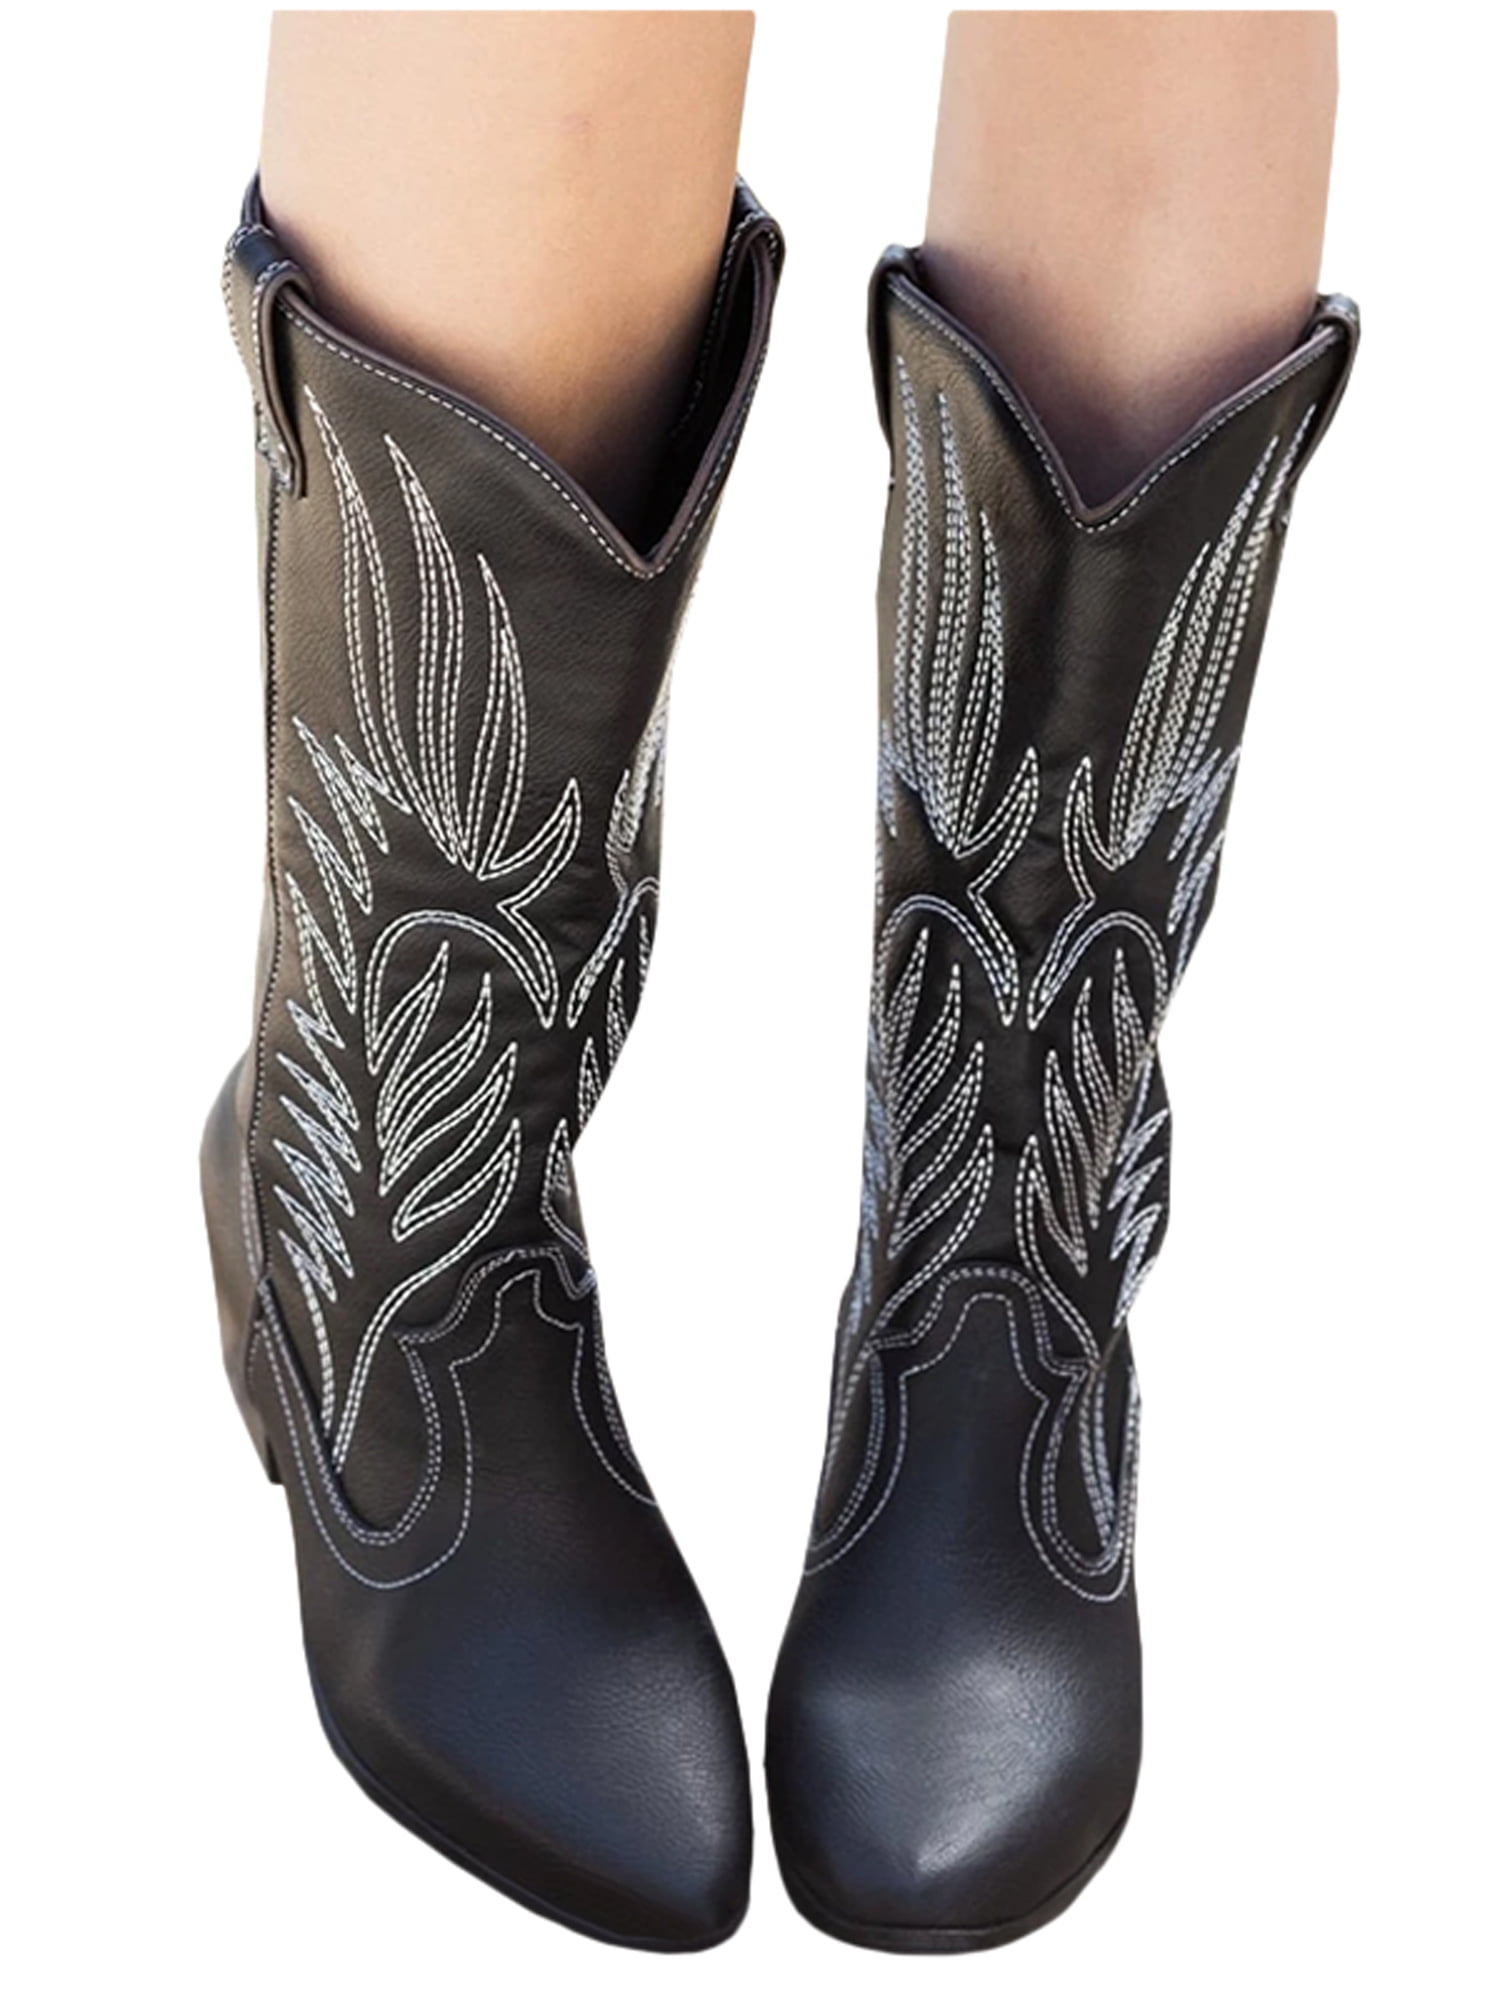 casual cowboy boots